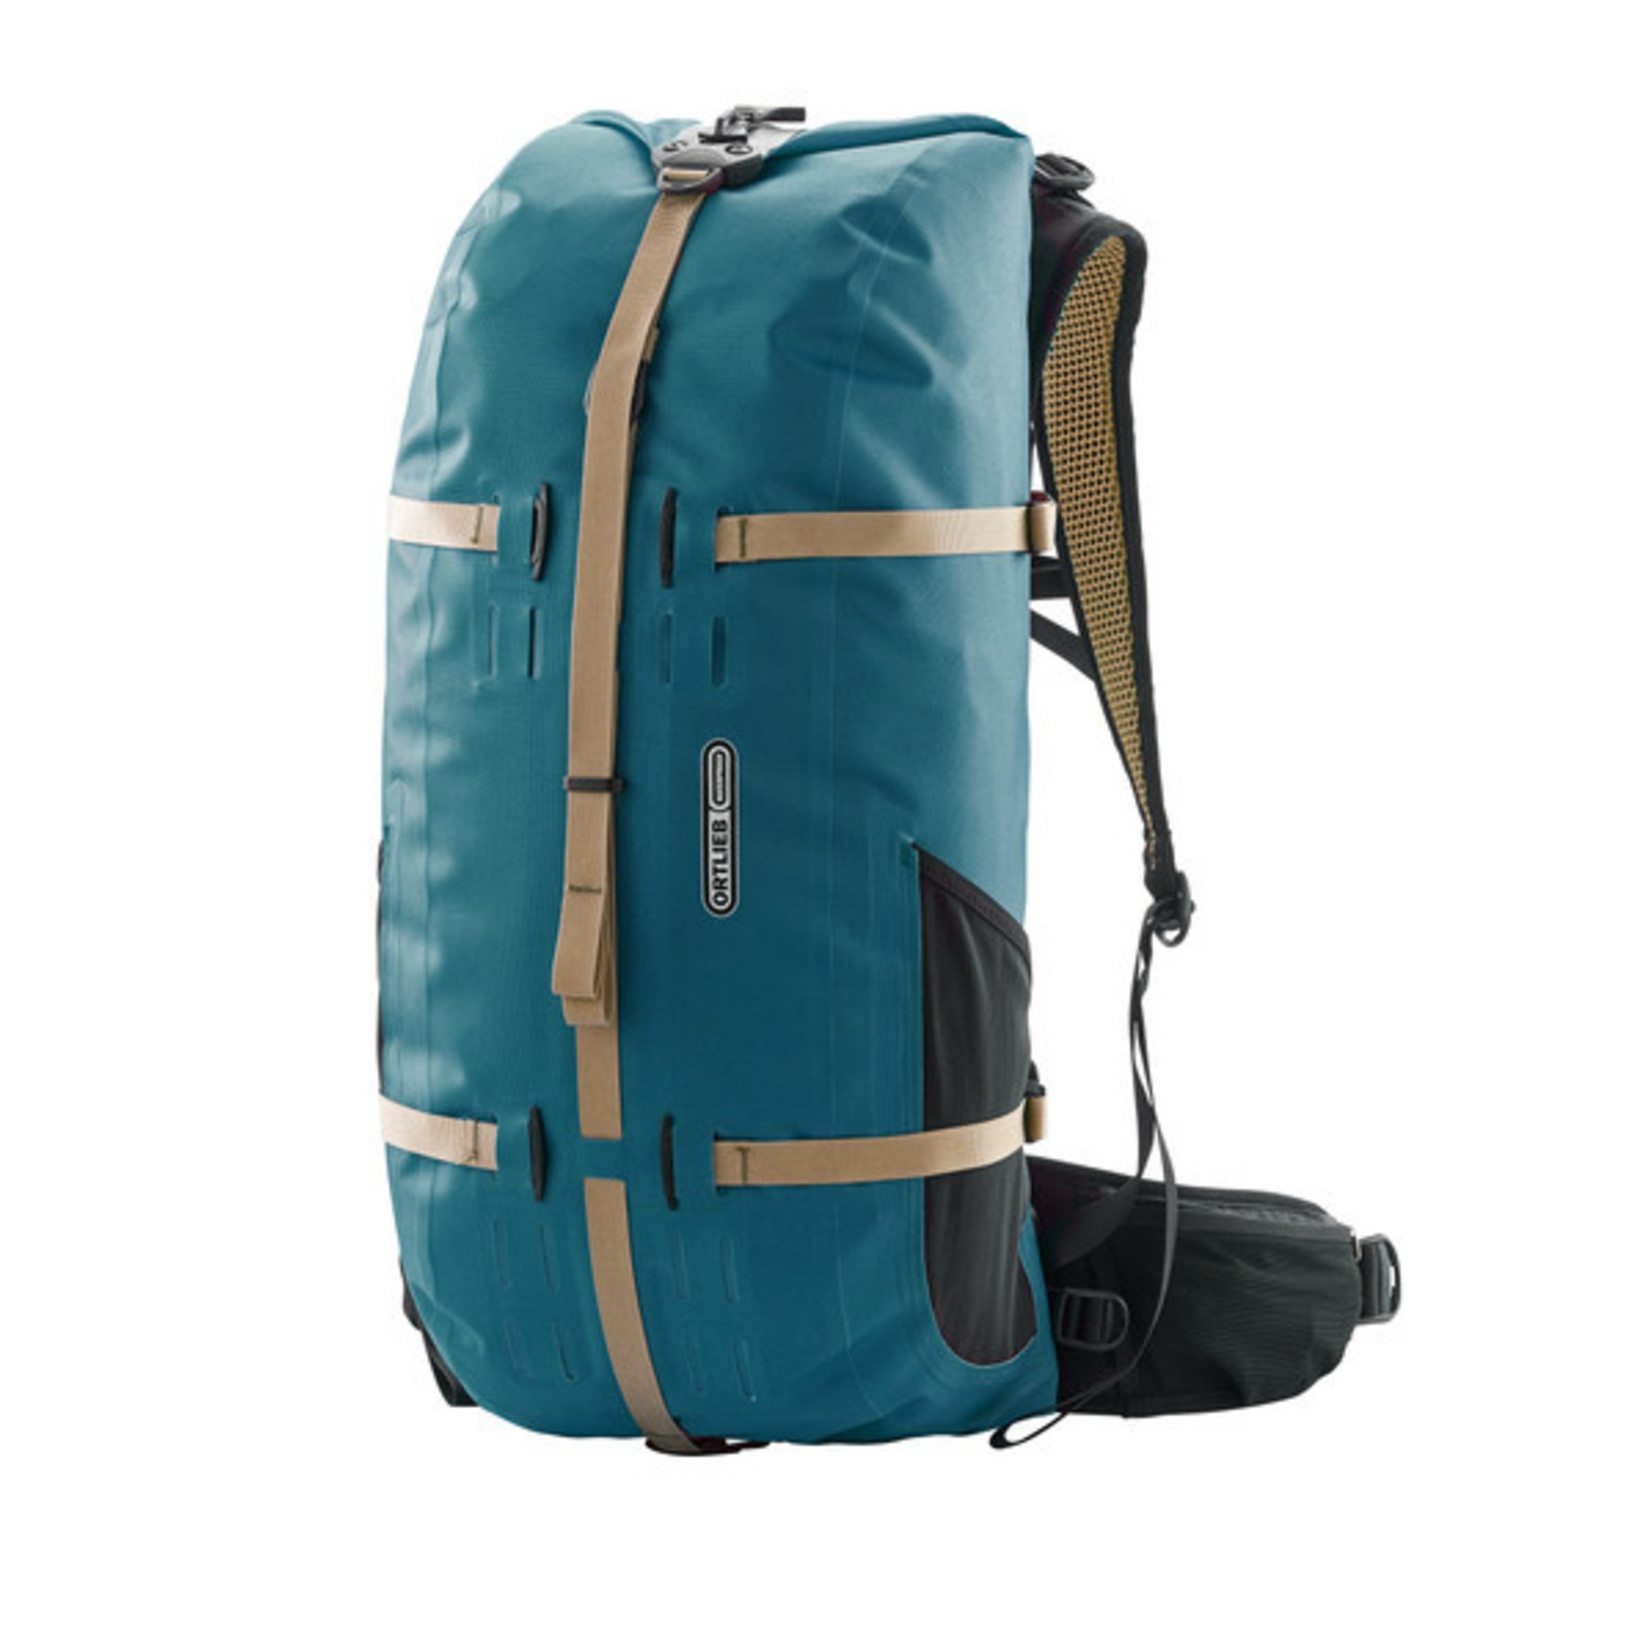 Ortlieb New Ortlieb Atrack Waterproof Backpack Travel Bag R7056 - 35L - Petrol